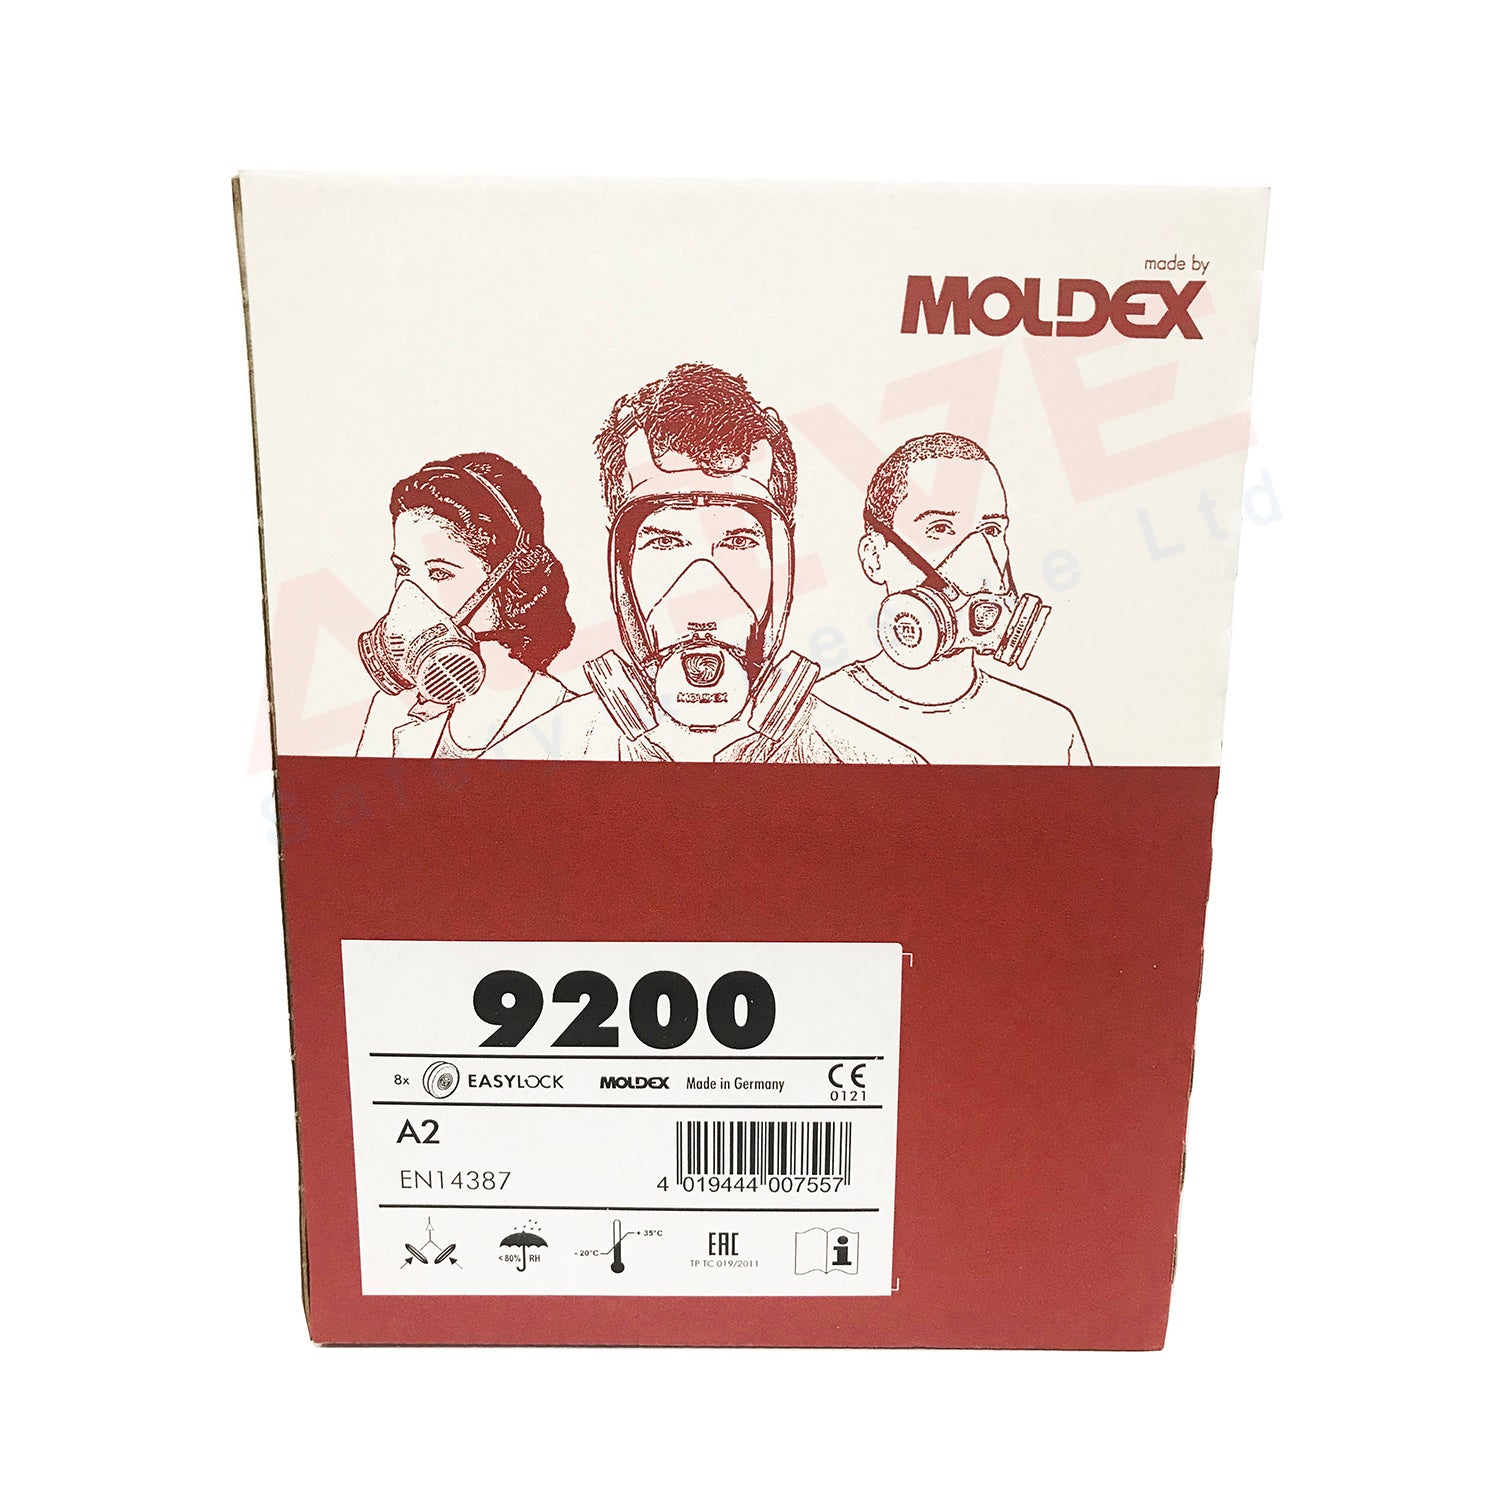 Moldex 9200 A2 Easylock Gas Filters Box 1